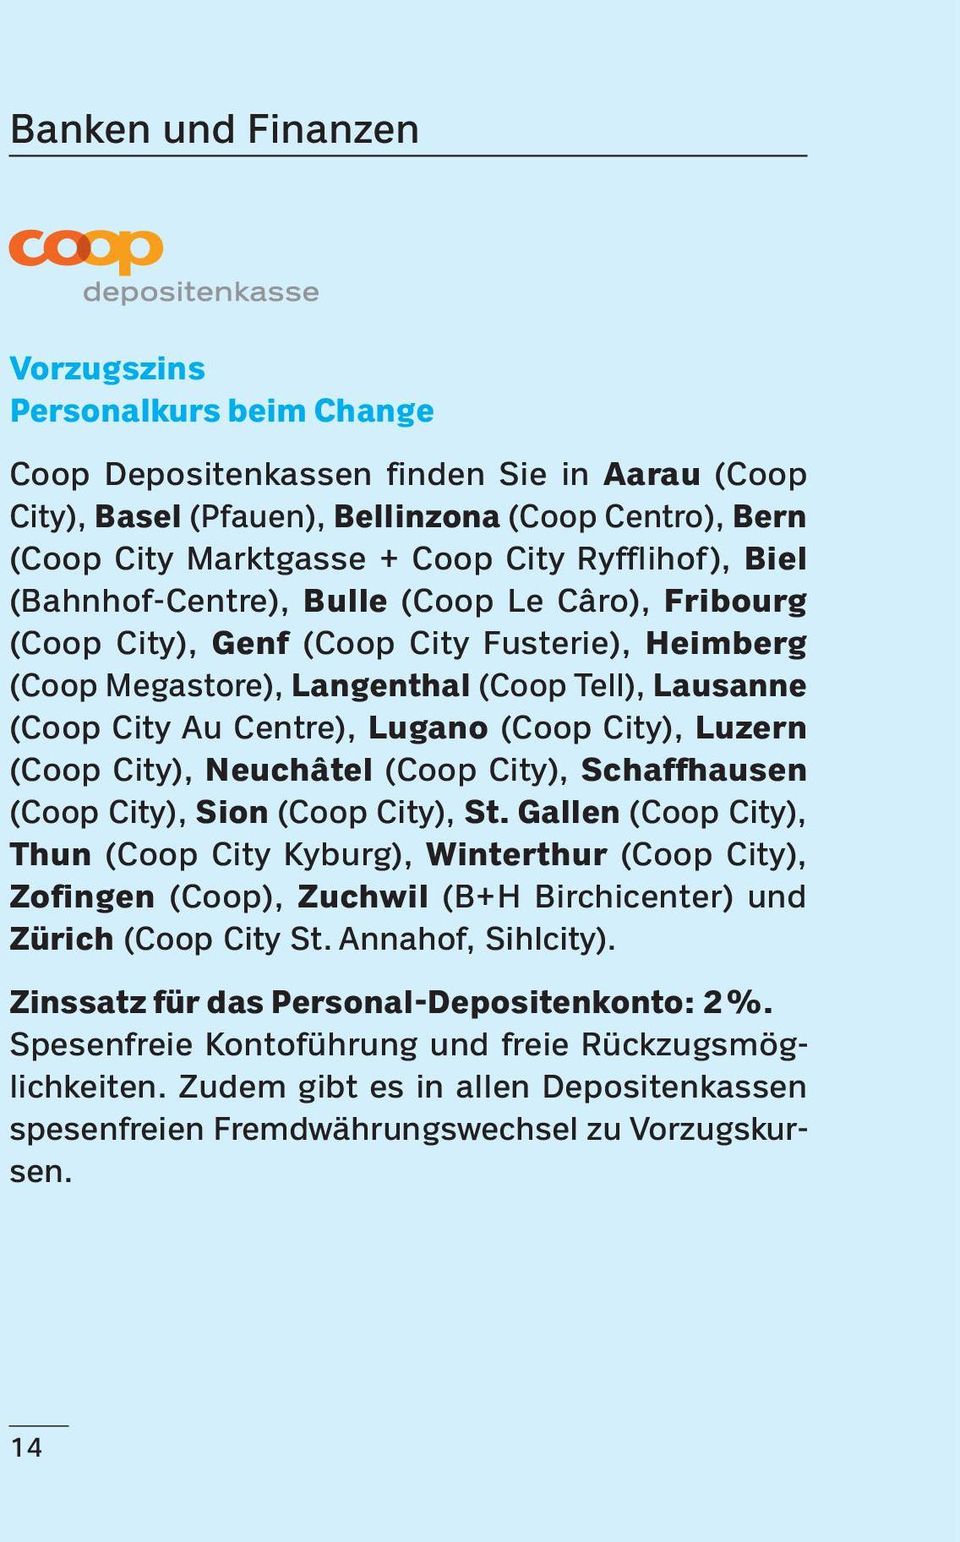 (Coop City), Luzern (Coop City), Neuchâtel (Coop City), Schaffhausen (Coop City), Sion (Coop City), St.